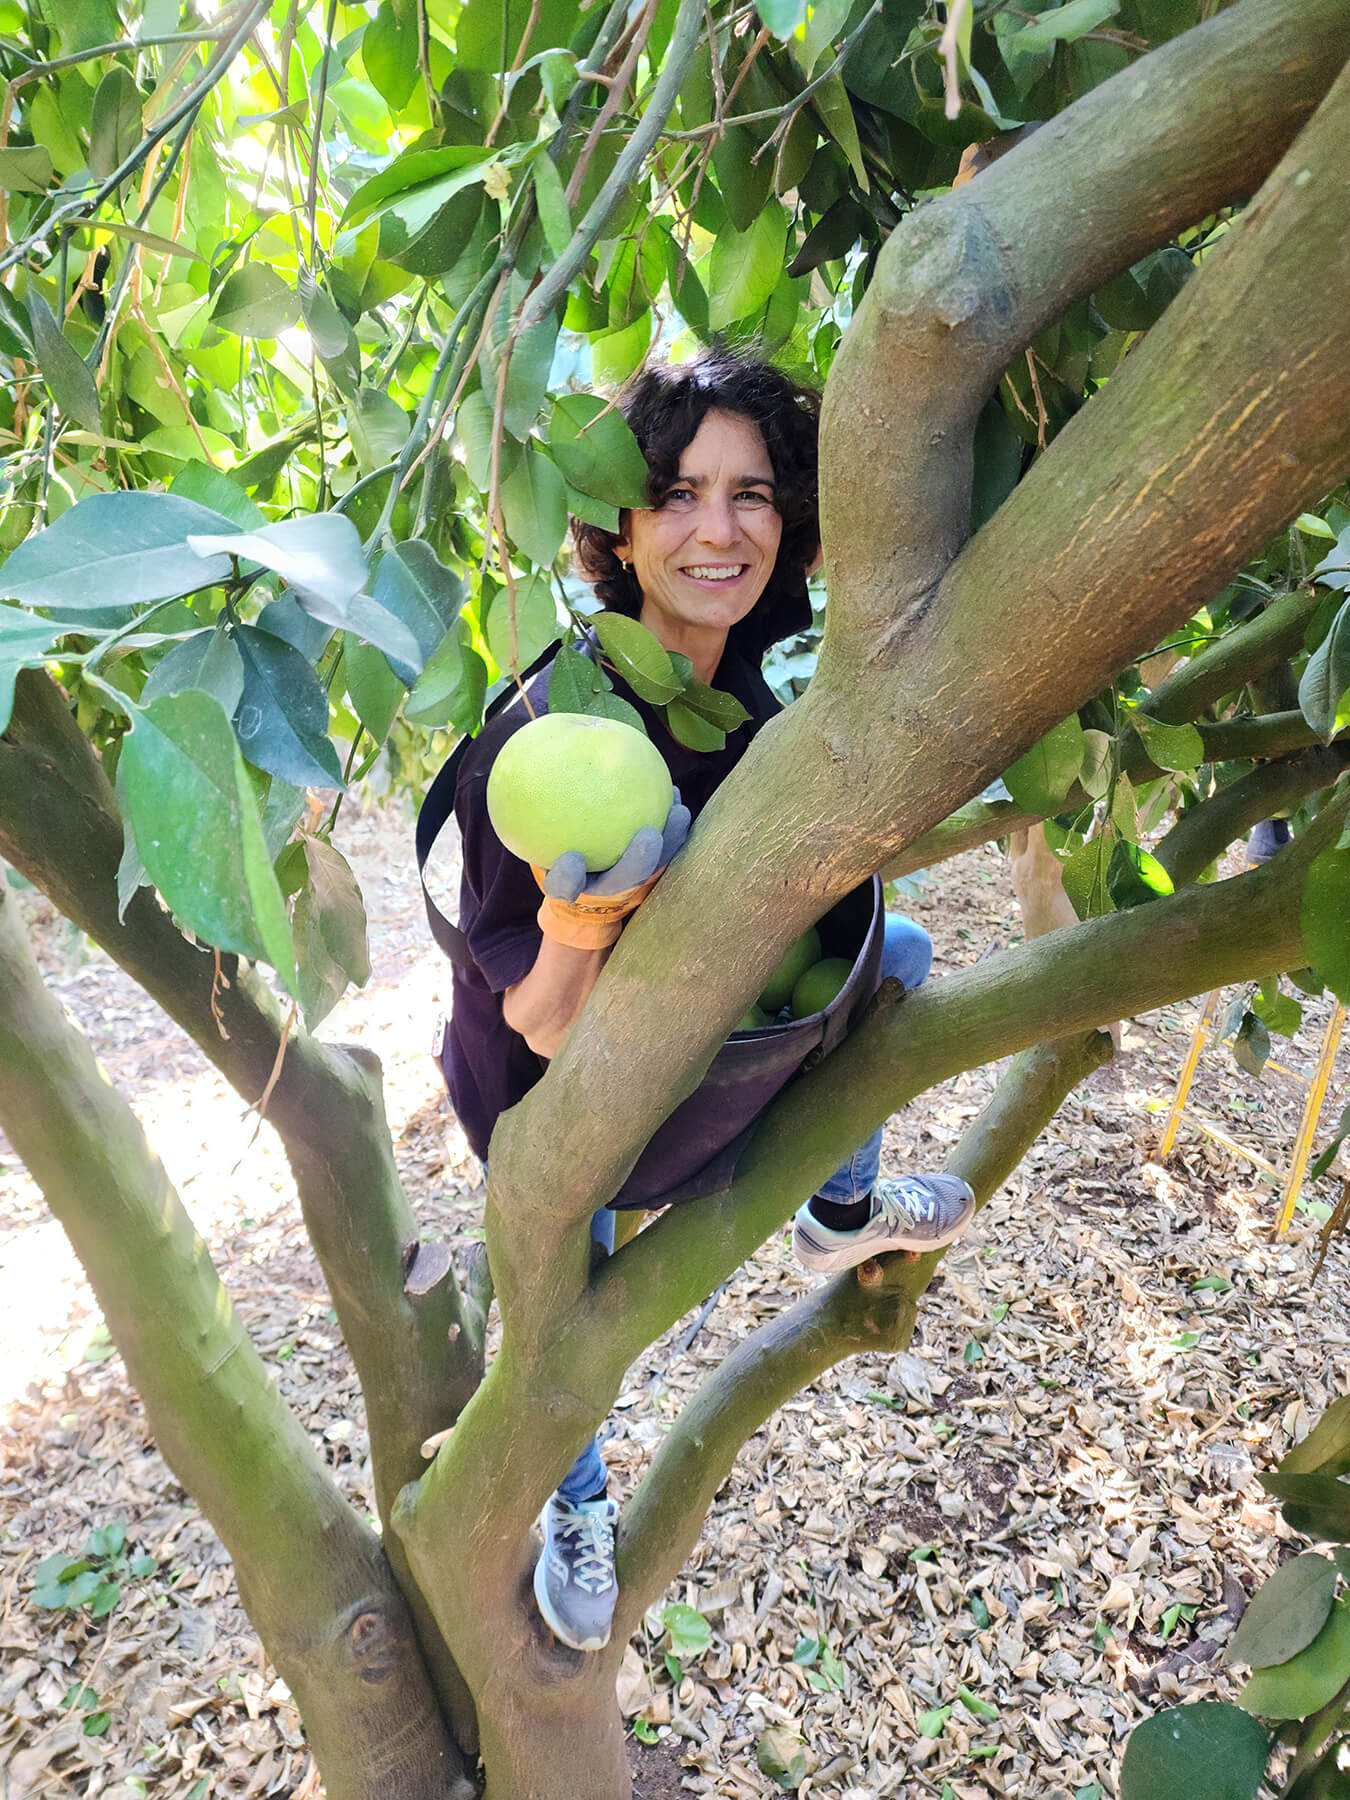 ICEJ staff member in tree picking fruit